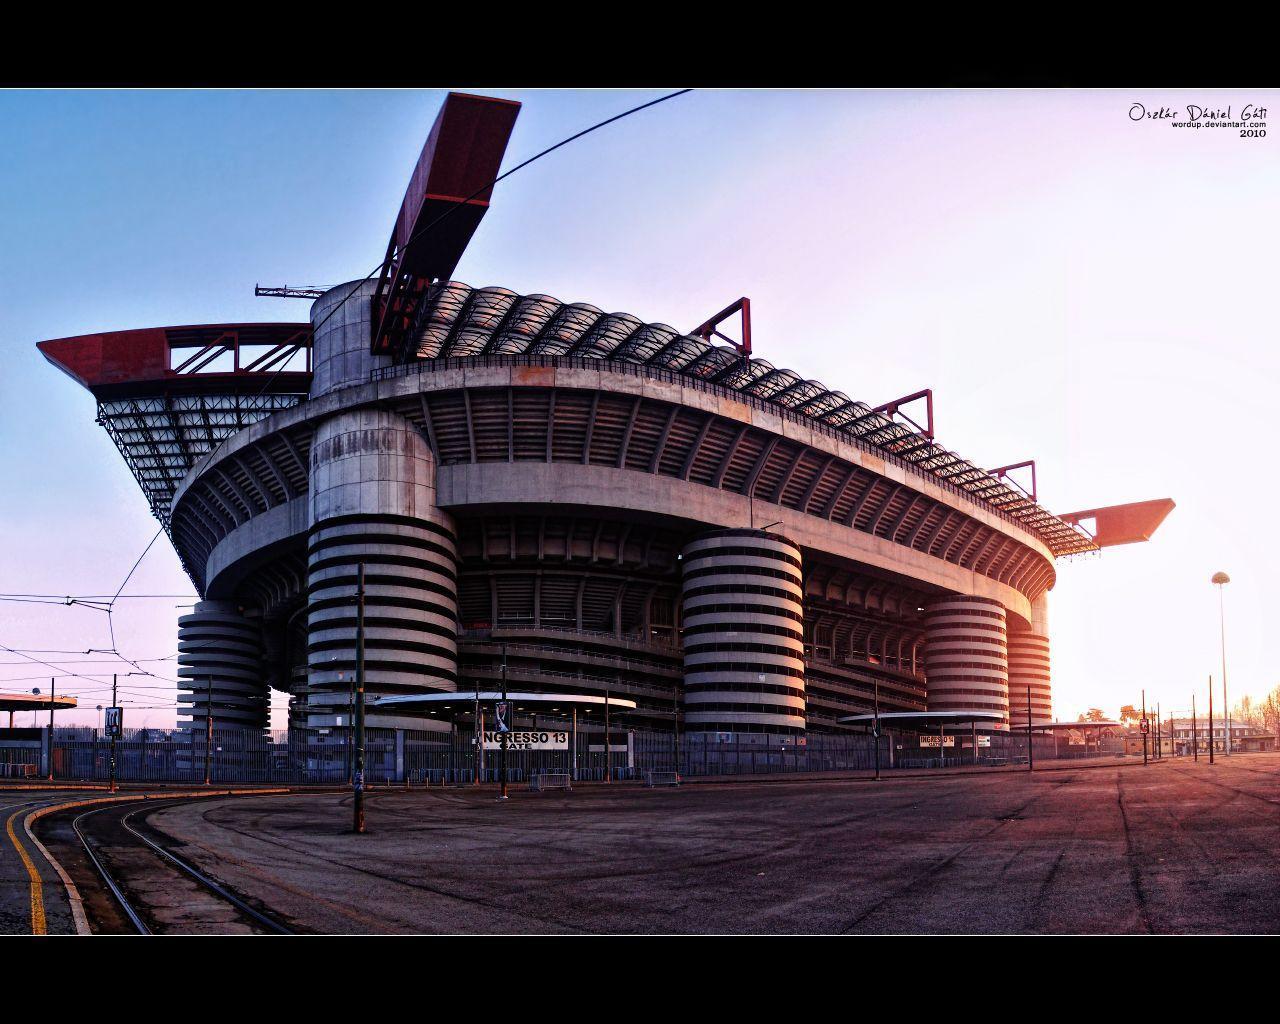 best image about AC Milan. Ac chievo verona